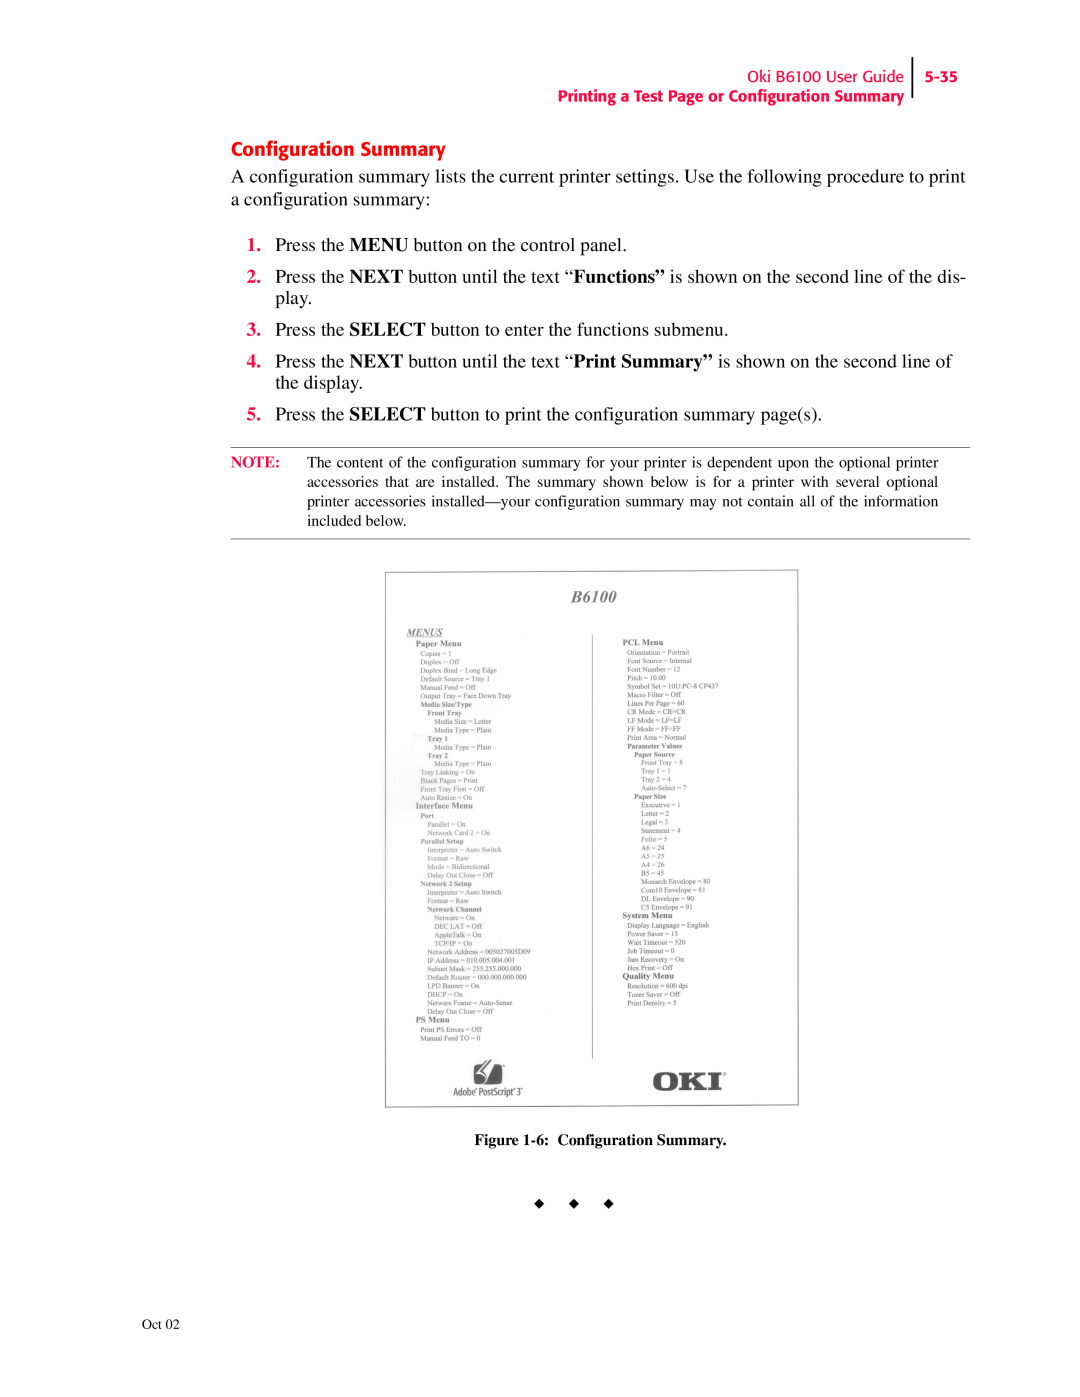 Oki 6100 manual 6 Configuration Summary 